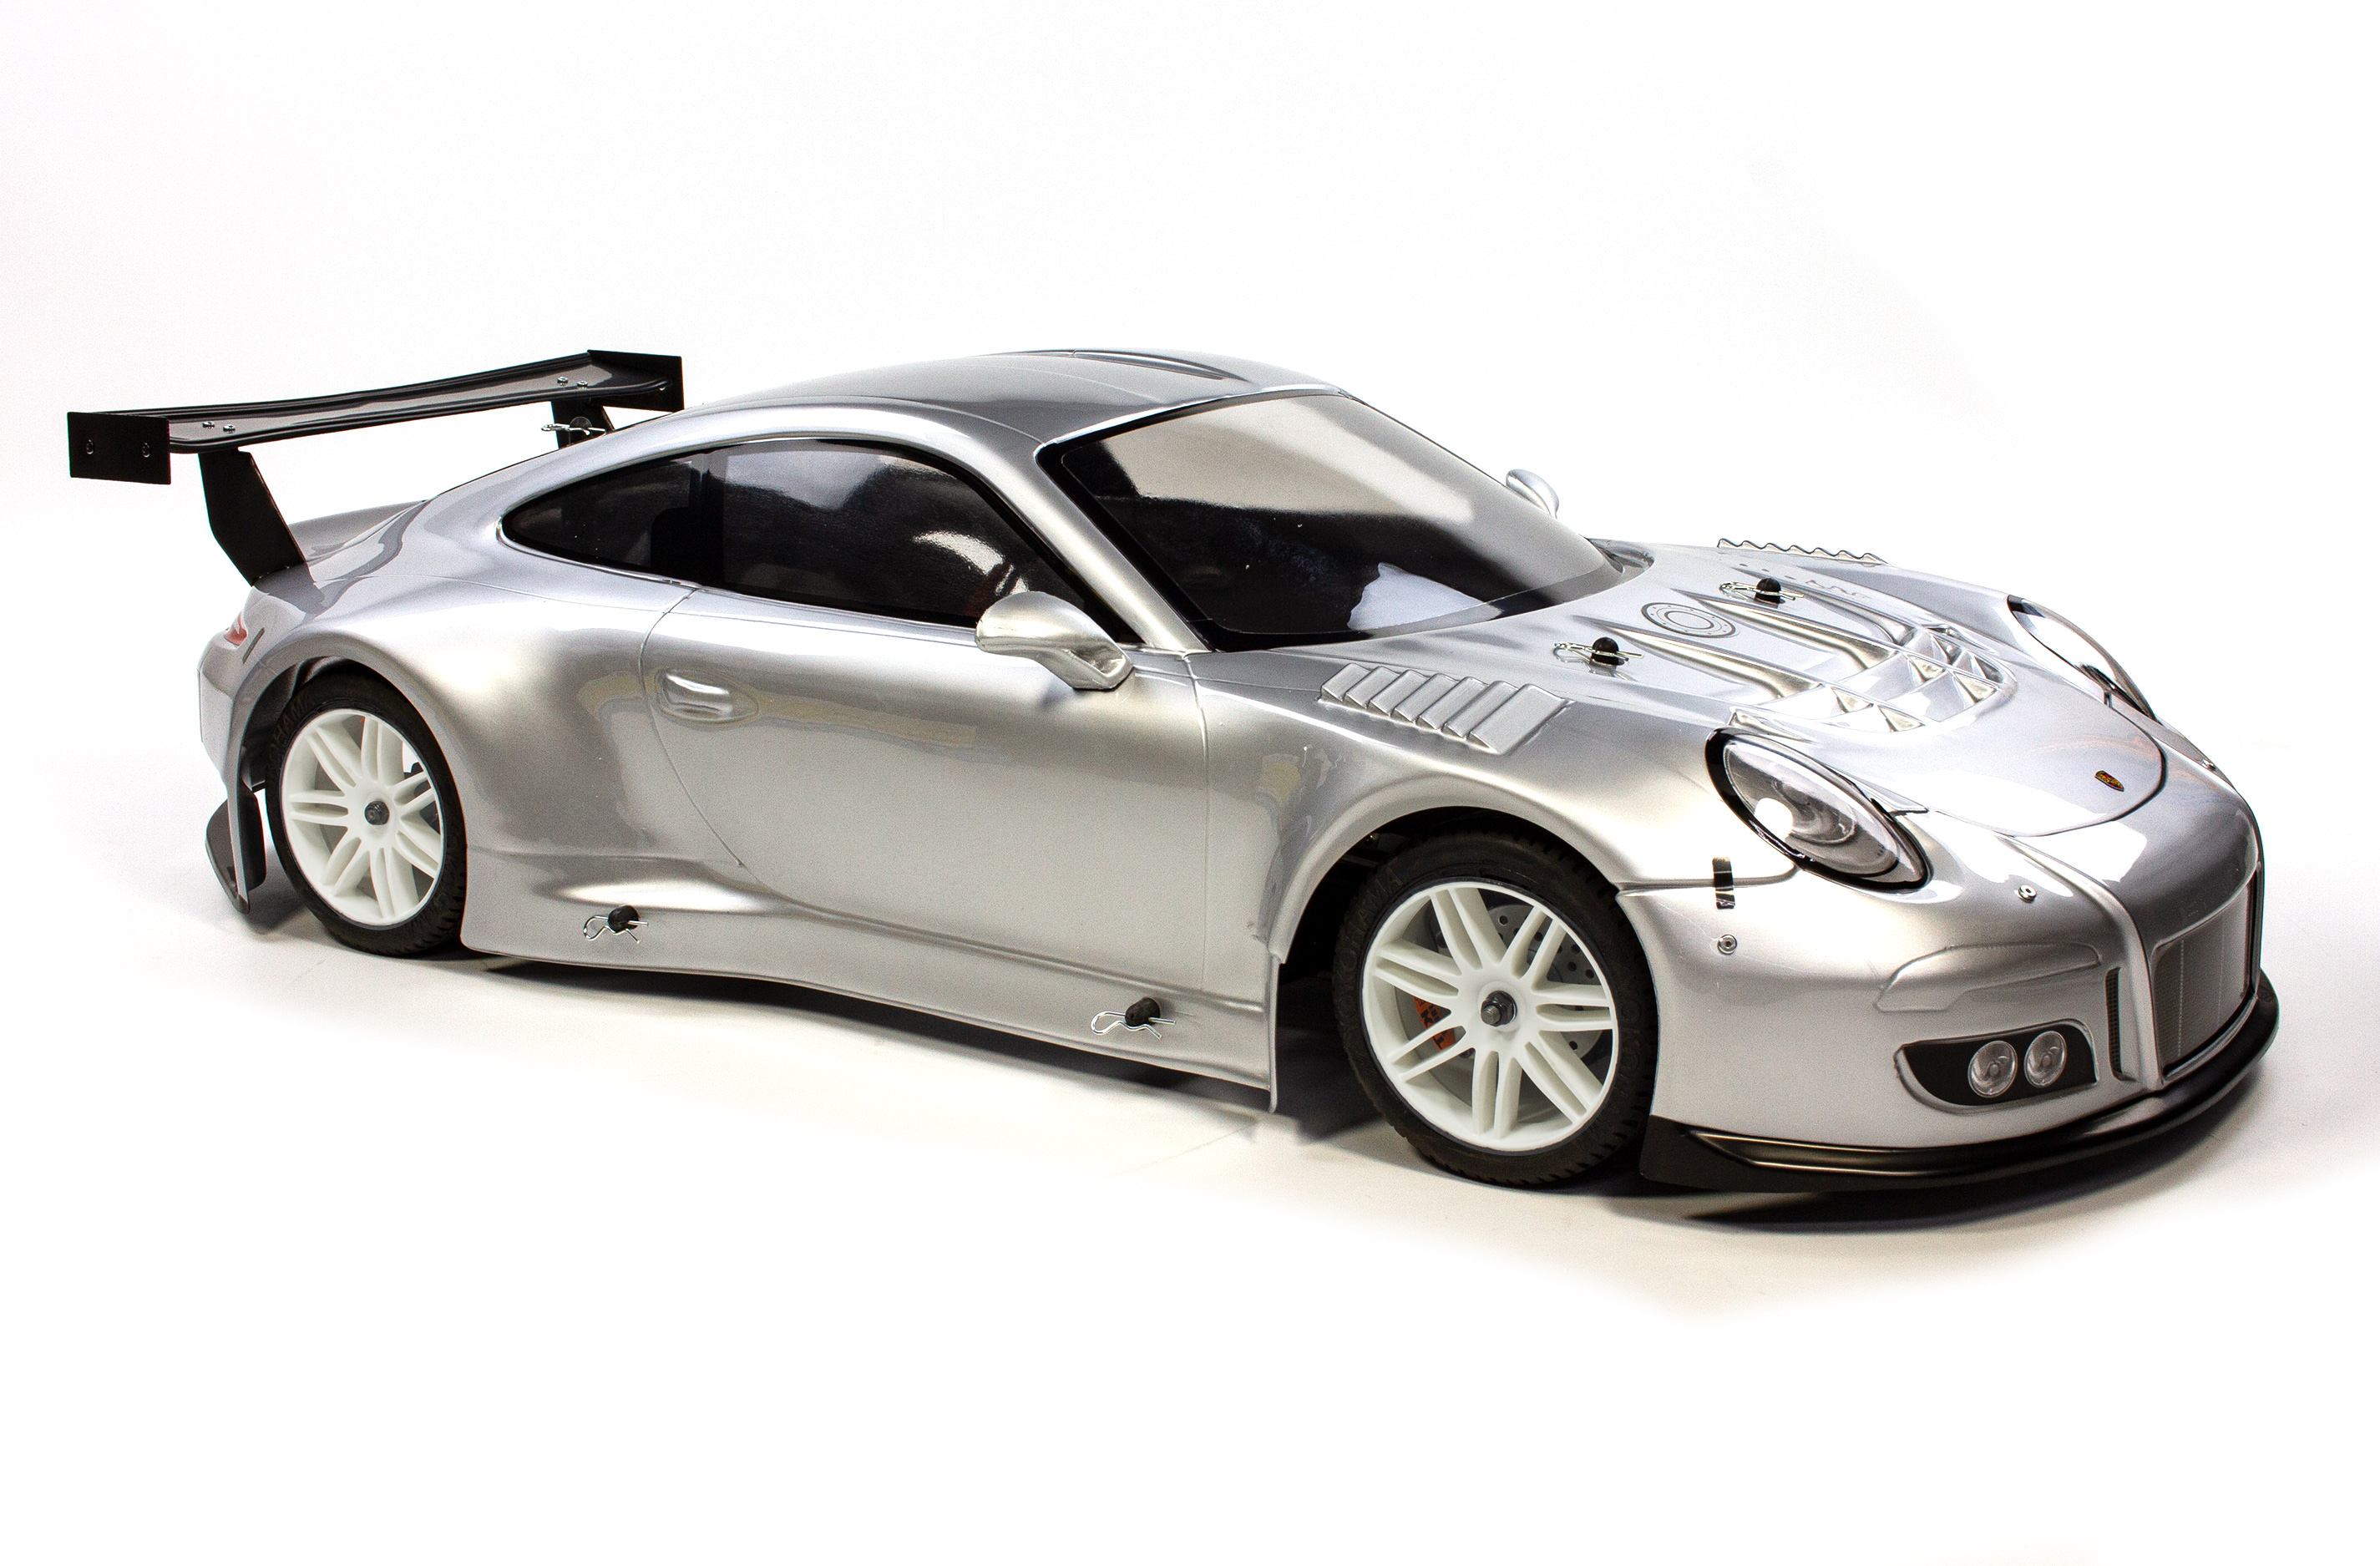 FG Sportsline with Porsche 911 body shell, 530 mm Wheelbase, 23cm³ Engine